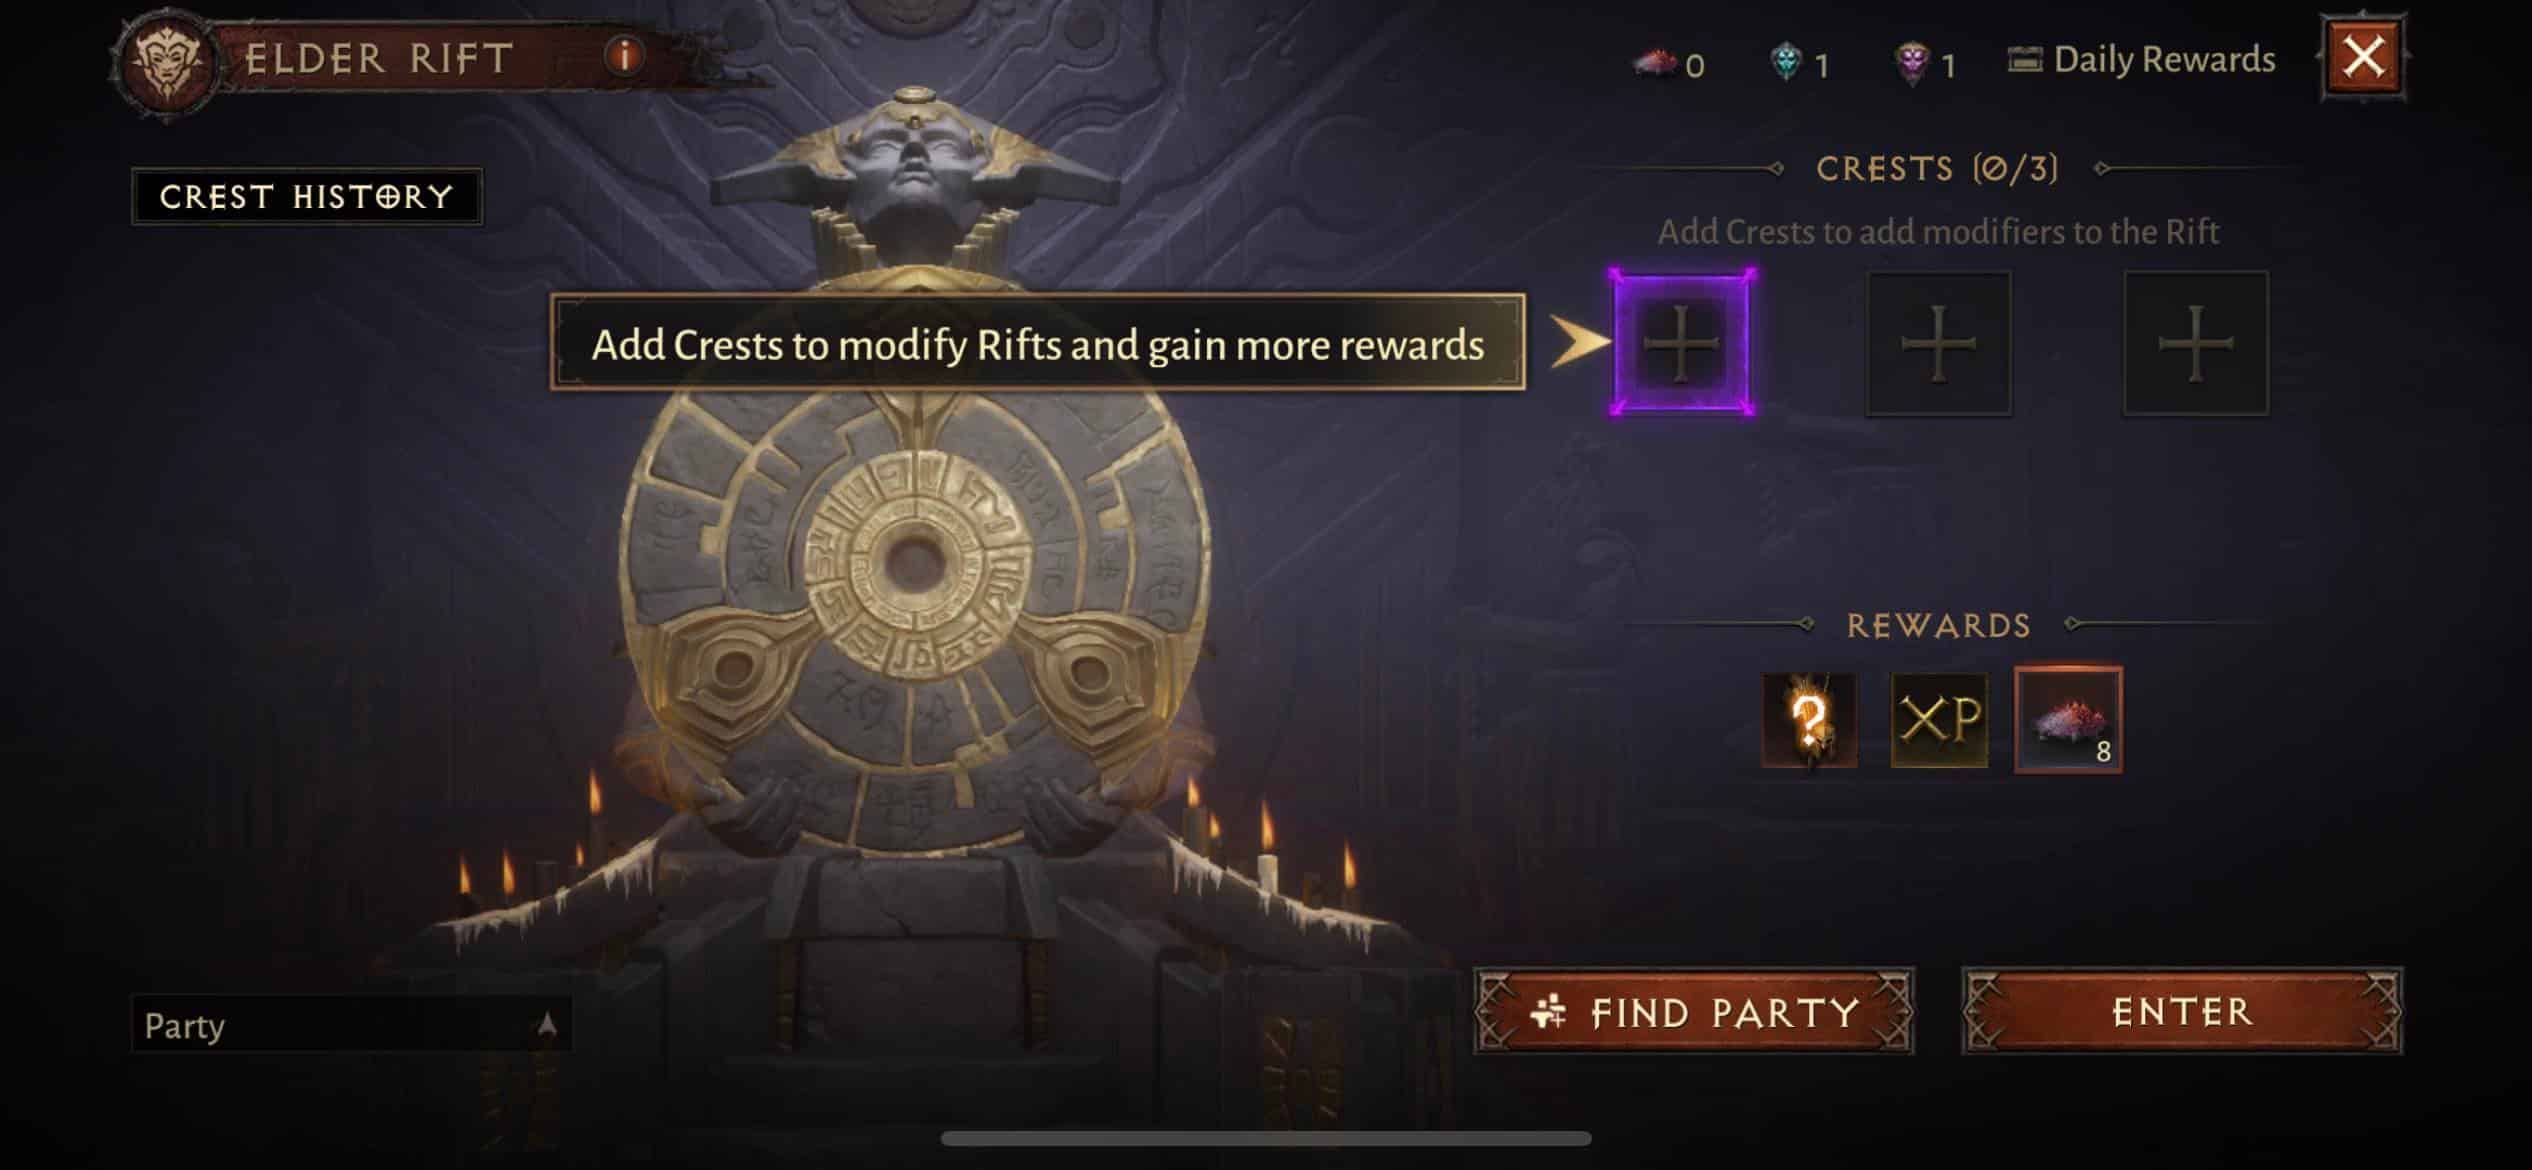 Diablo Immortal fan turns 600 million WoW gold into microtransactions